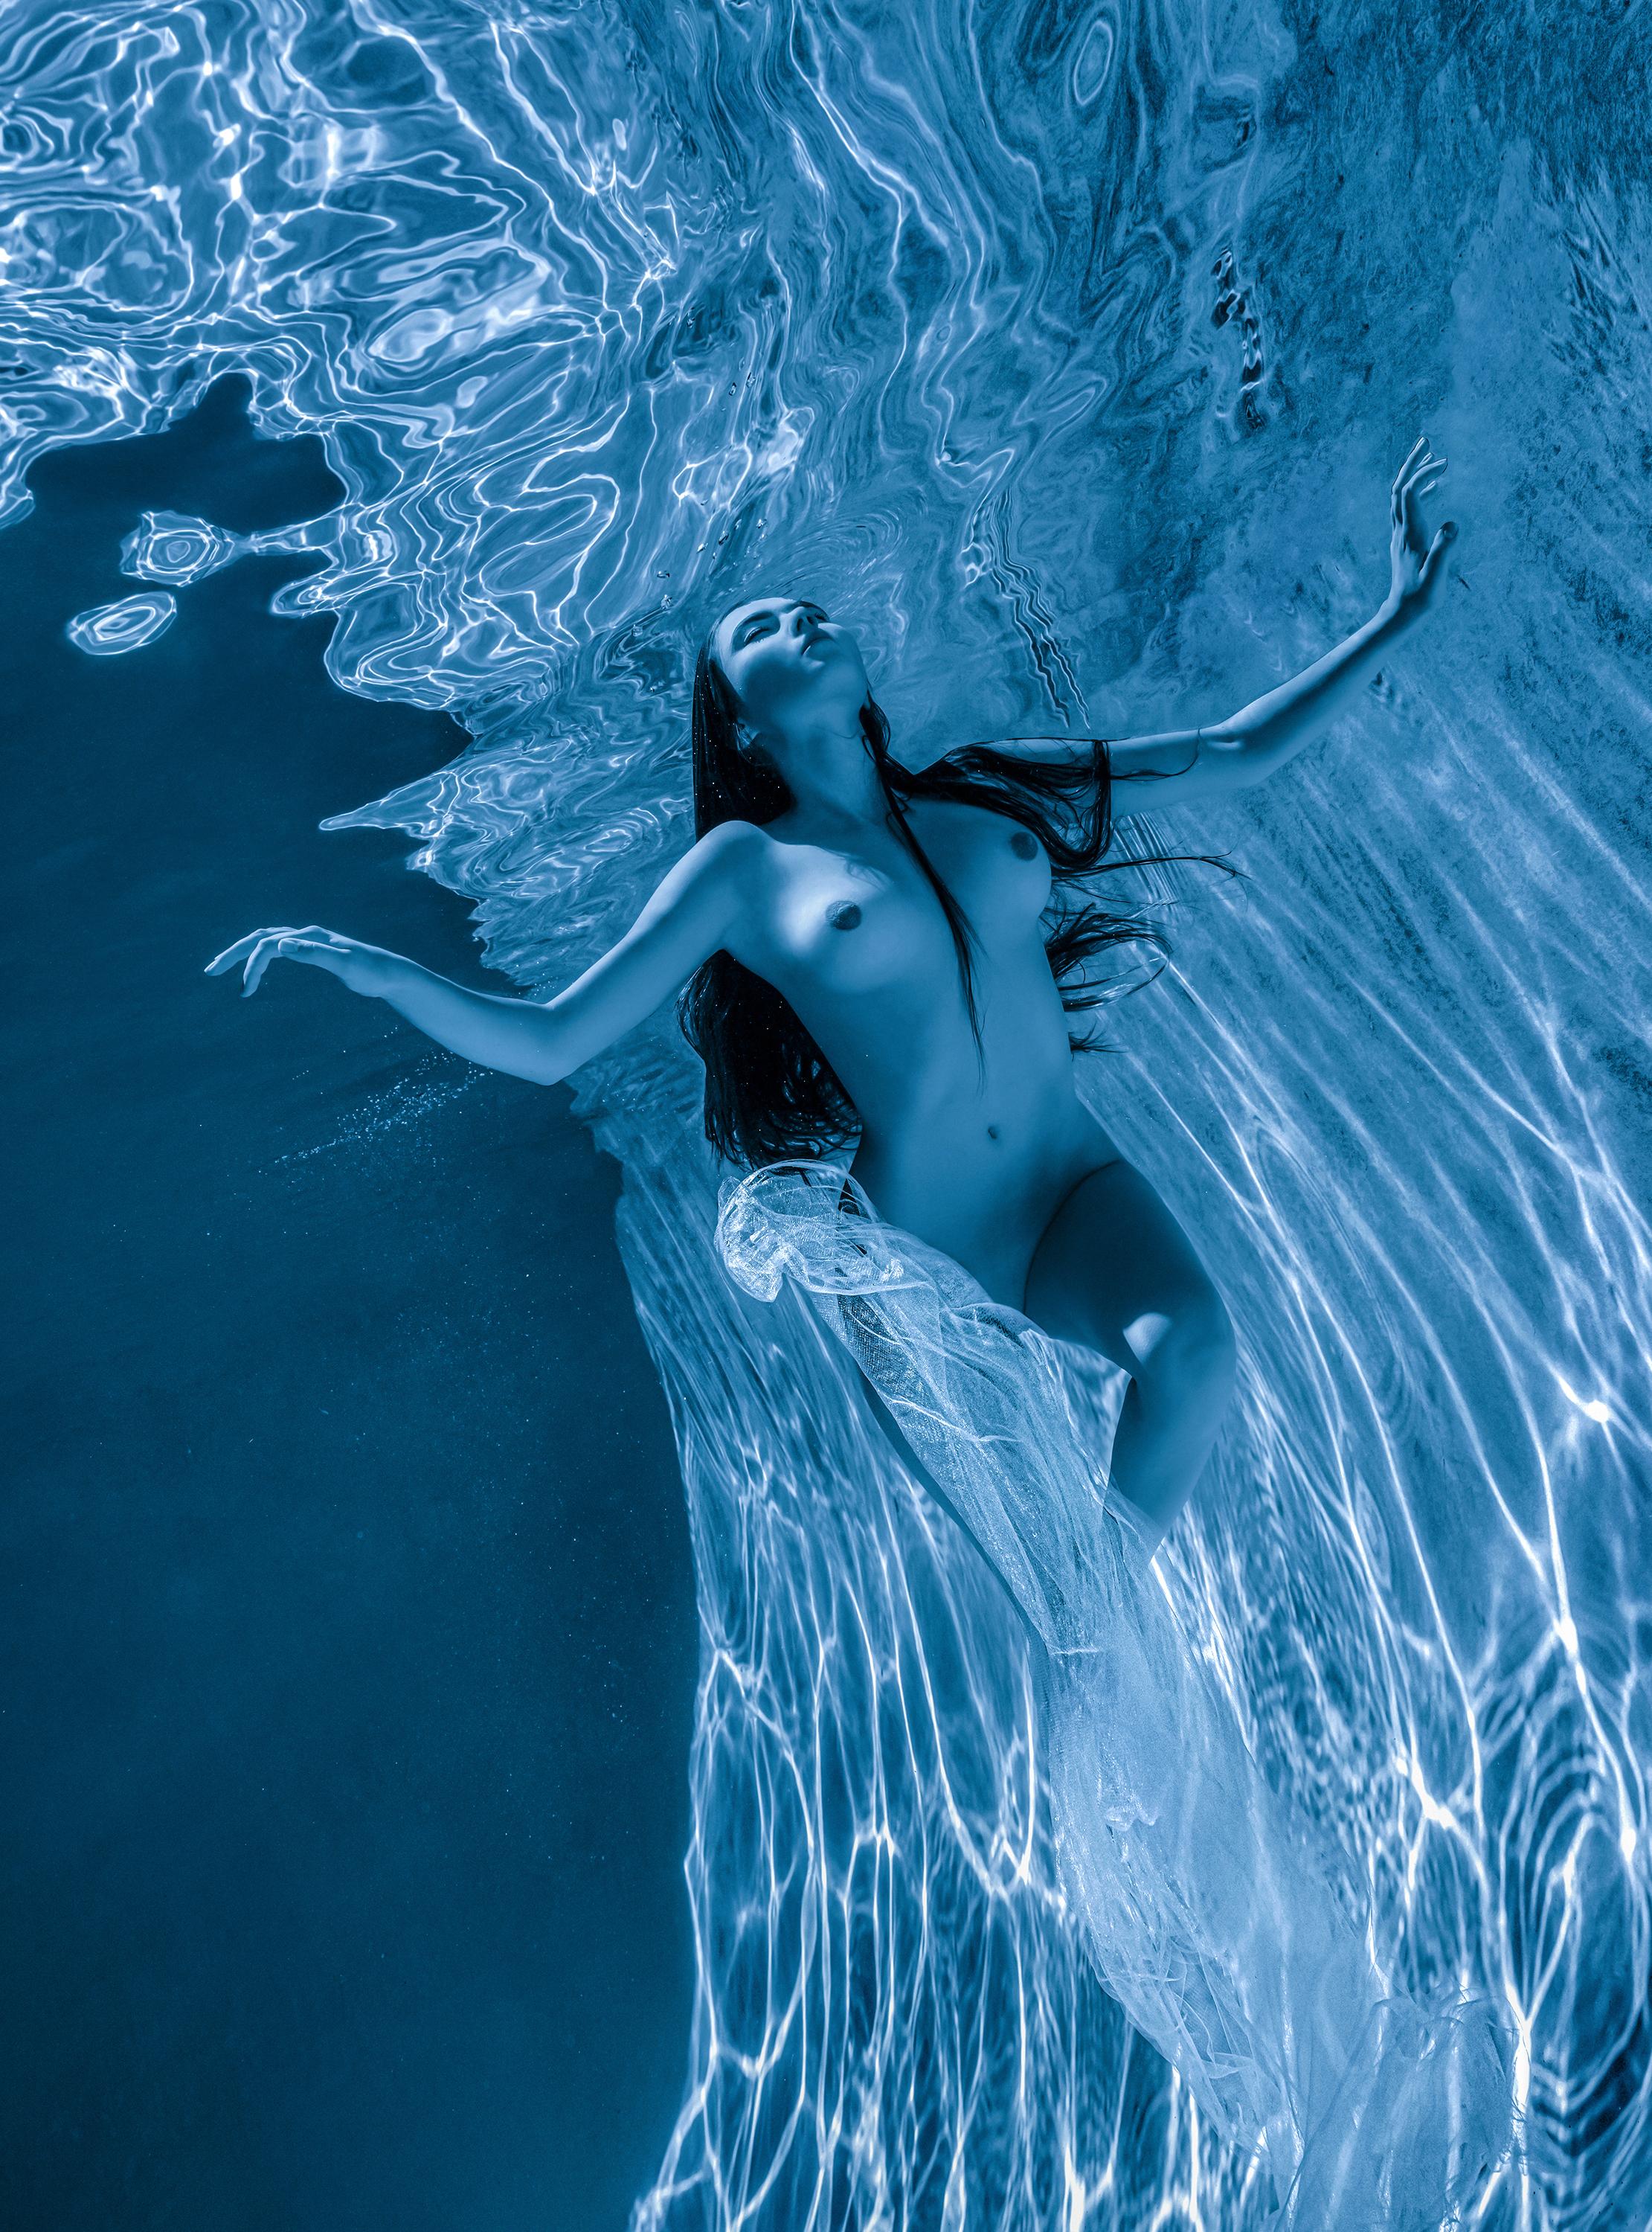 Freediver - underwater nude photograph - archival pigment print 35x26"